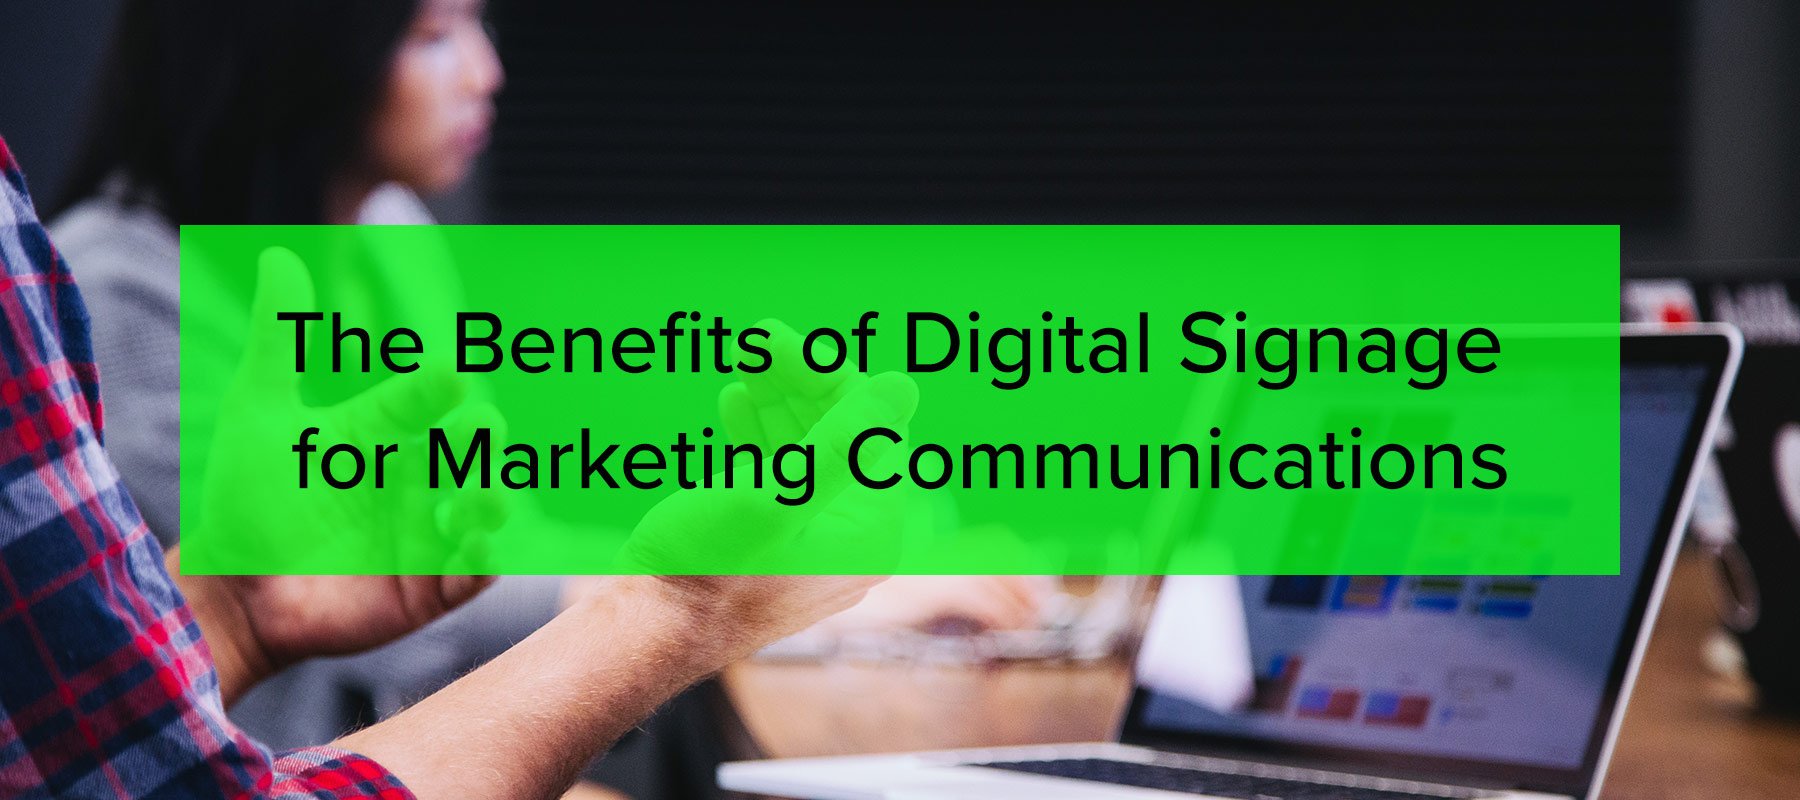 Benefits of Digital Signage for Marketing Communications